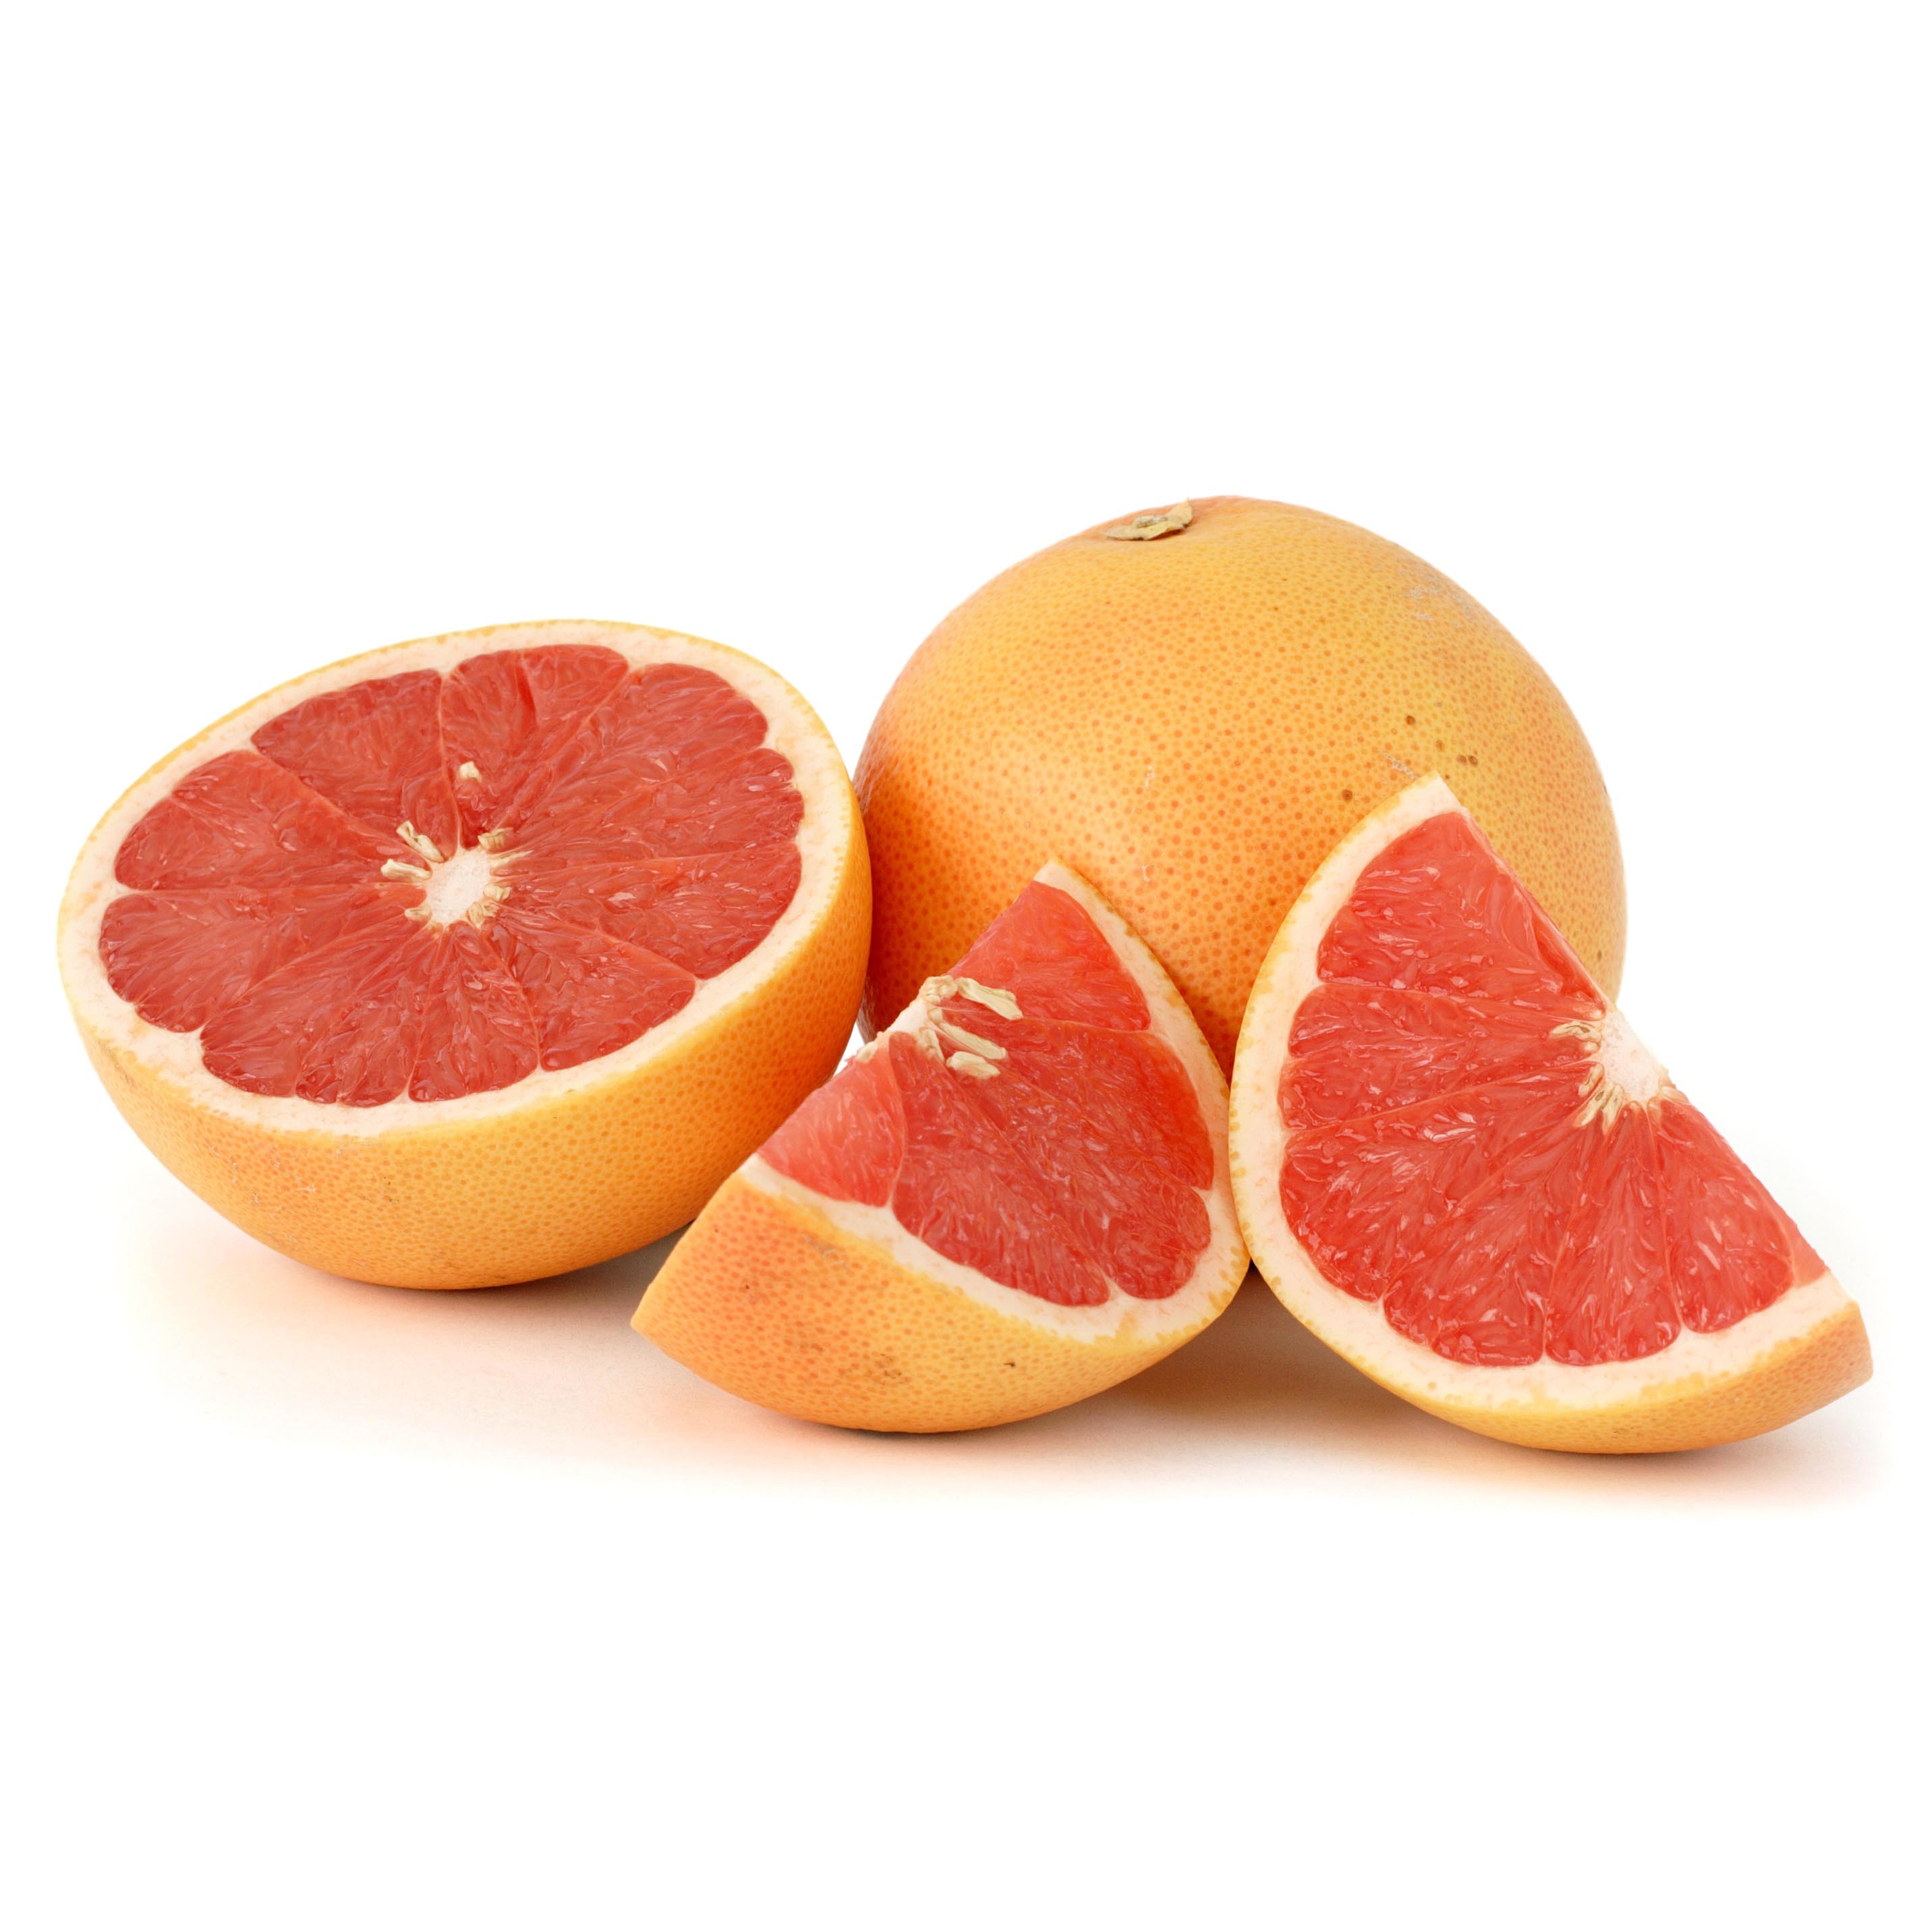 Organic Ruby Grapefruit - AUS*